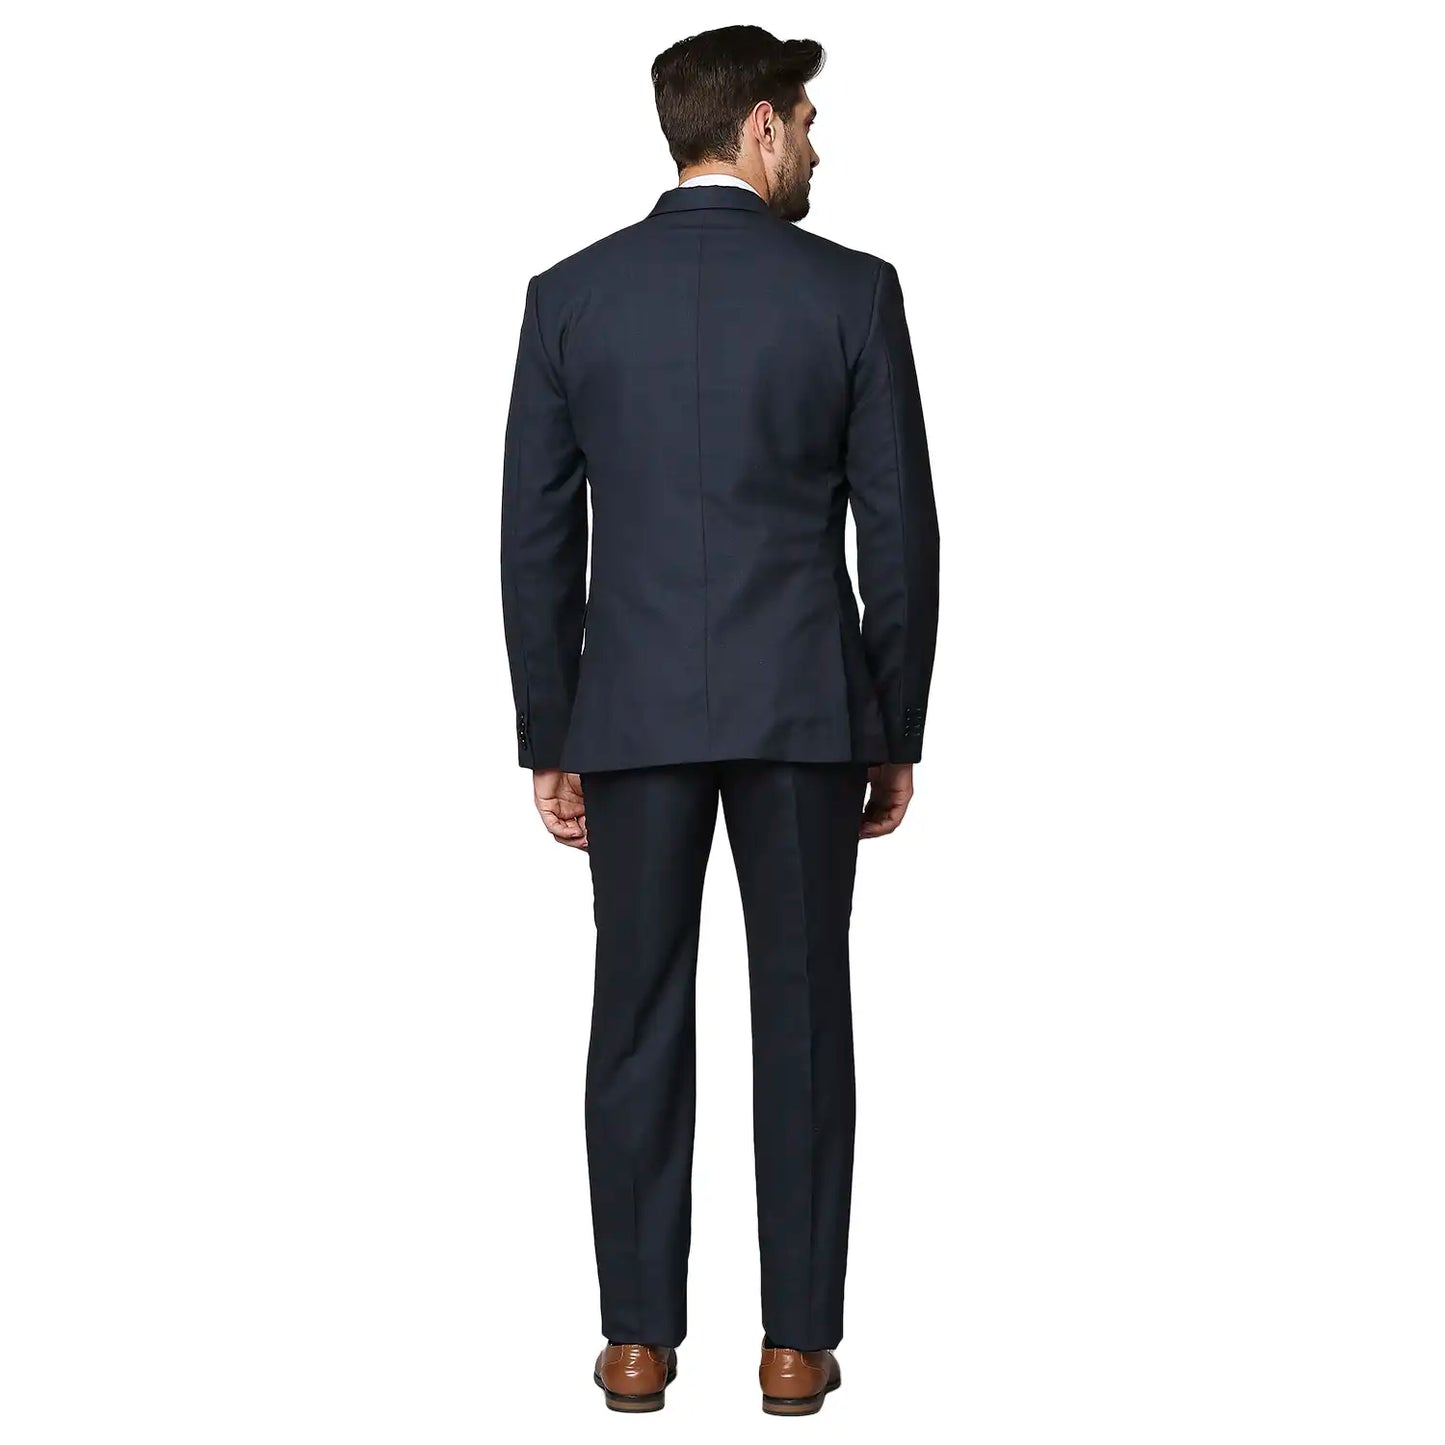 Men Contemporary Fit Dark Brown Suit